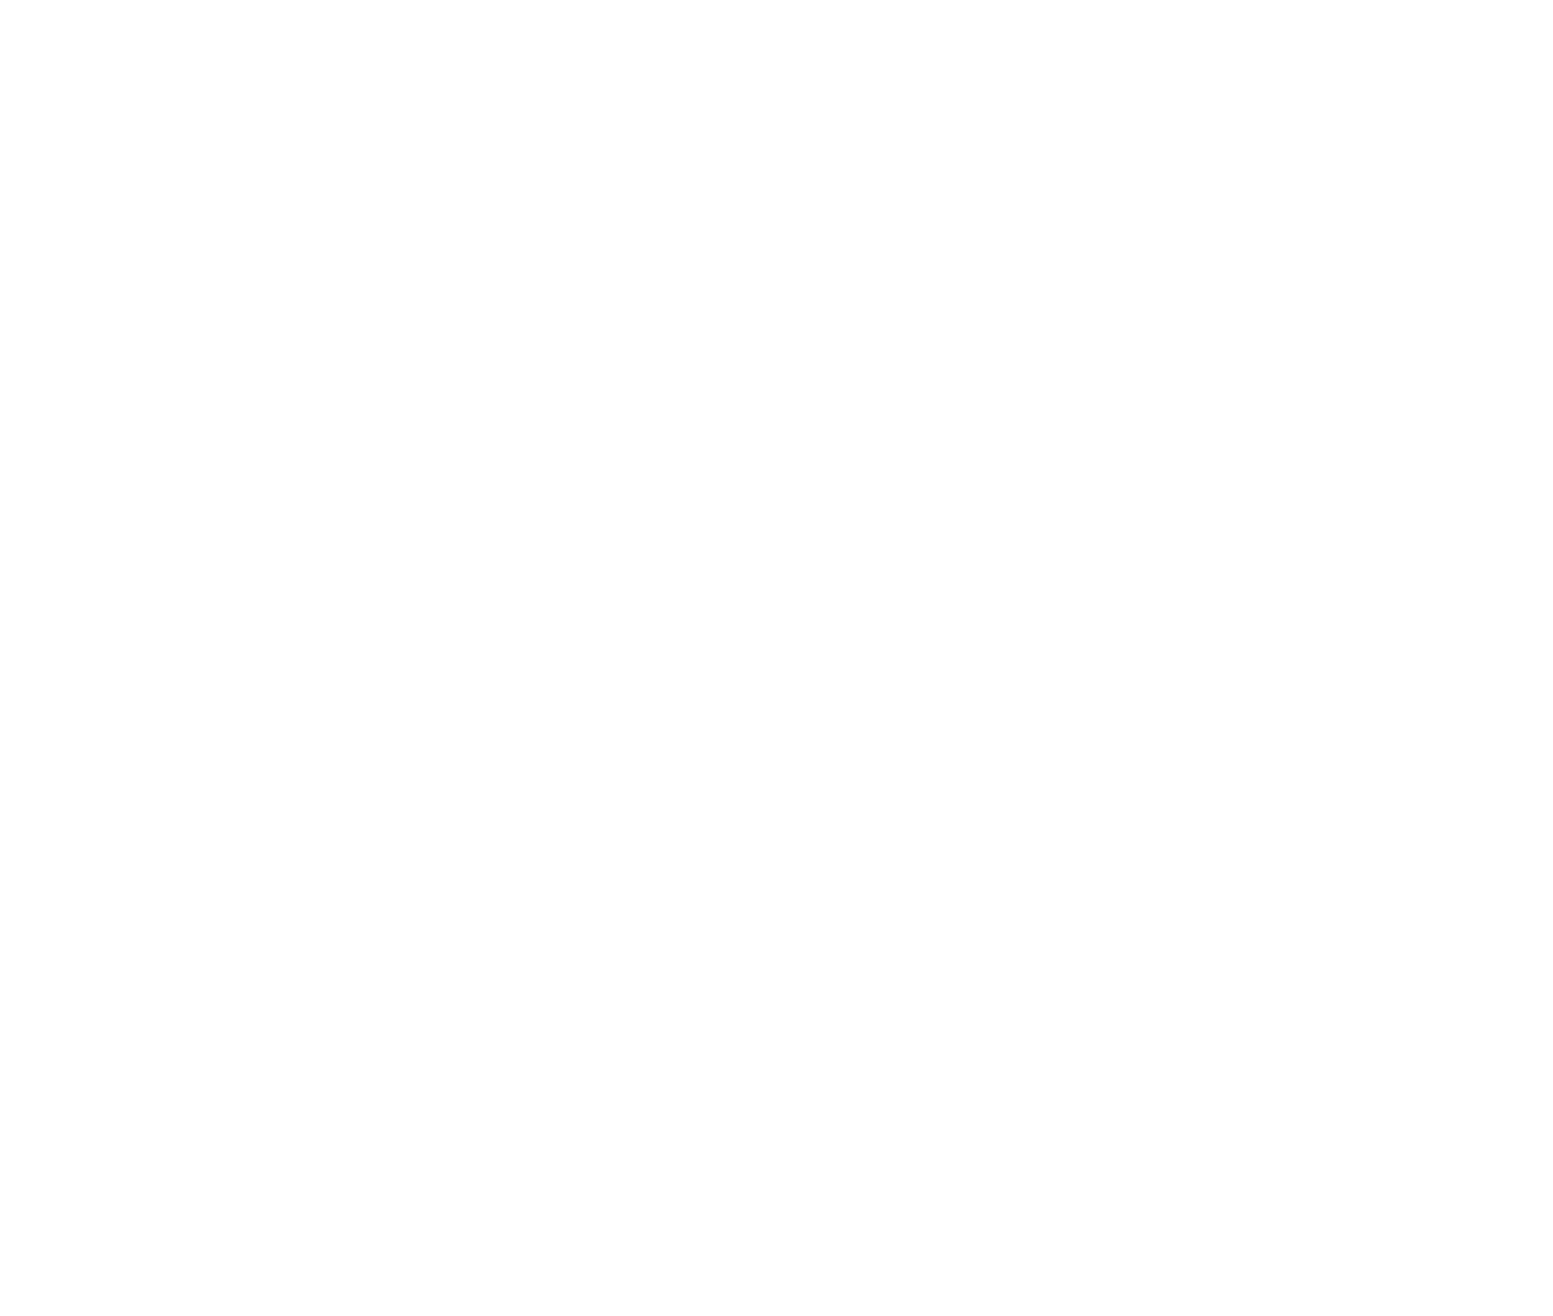 Hustle Connection